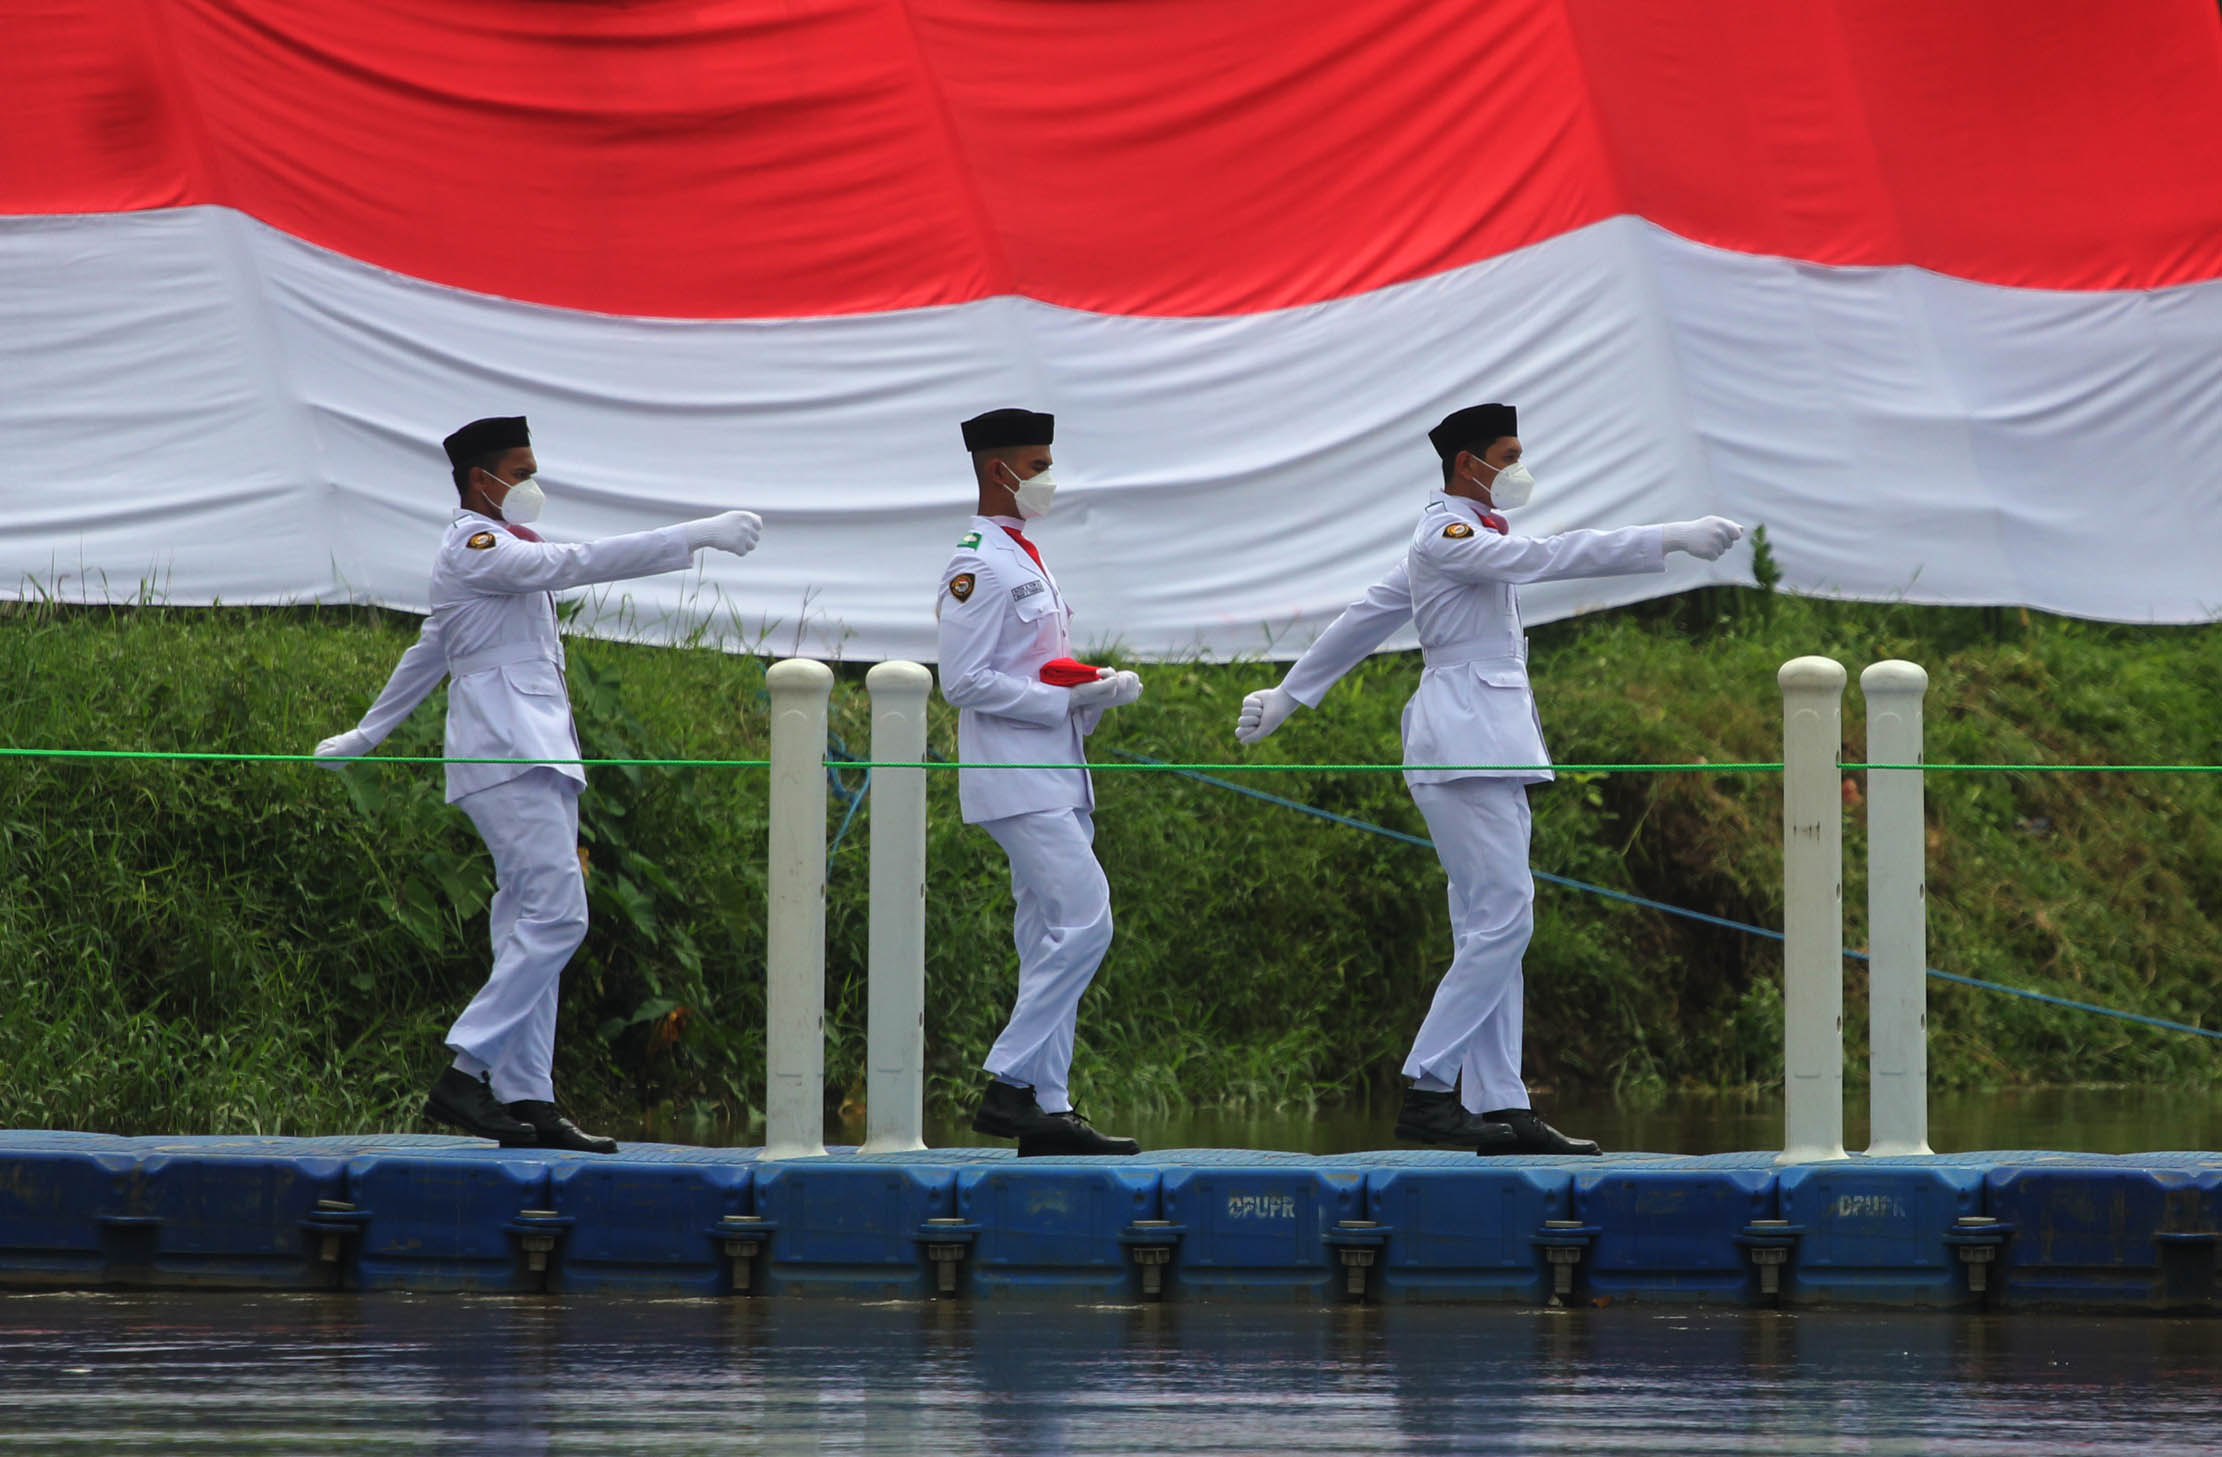 Sejumlah pelajar,Kepolisian,TNI,pejabat pemerintahan serta beberapa organisasi massa di Kota Tangerang menggelar upacara bendera memperingati Hari Sumpah Pemuda di tengah sungai cisadane, Kamis 28 Oktober 2021. Foto : Panji Asmoro/TrenAsia